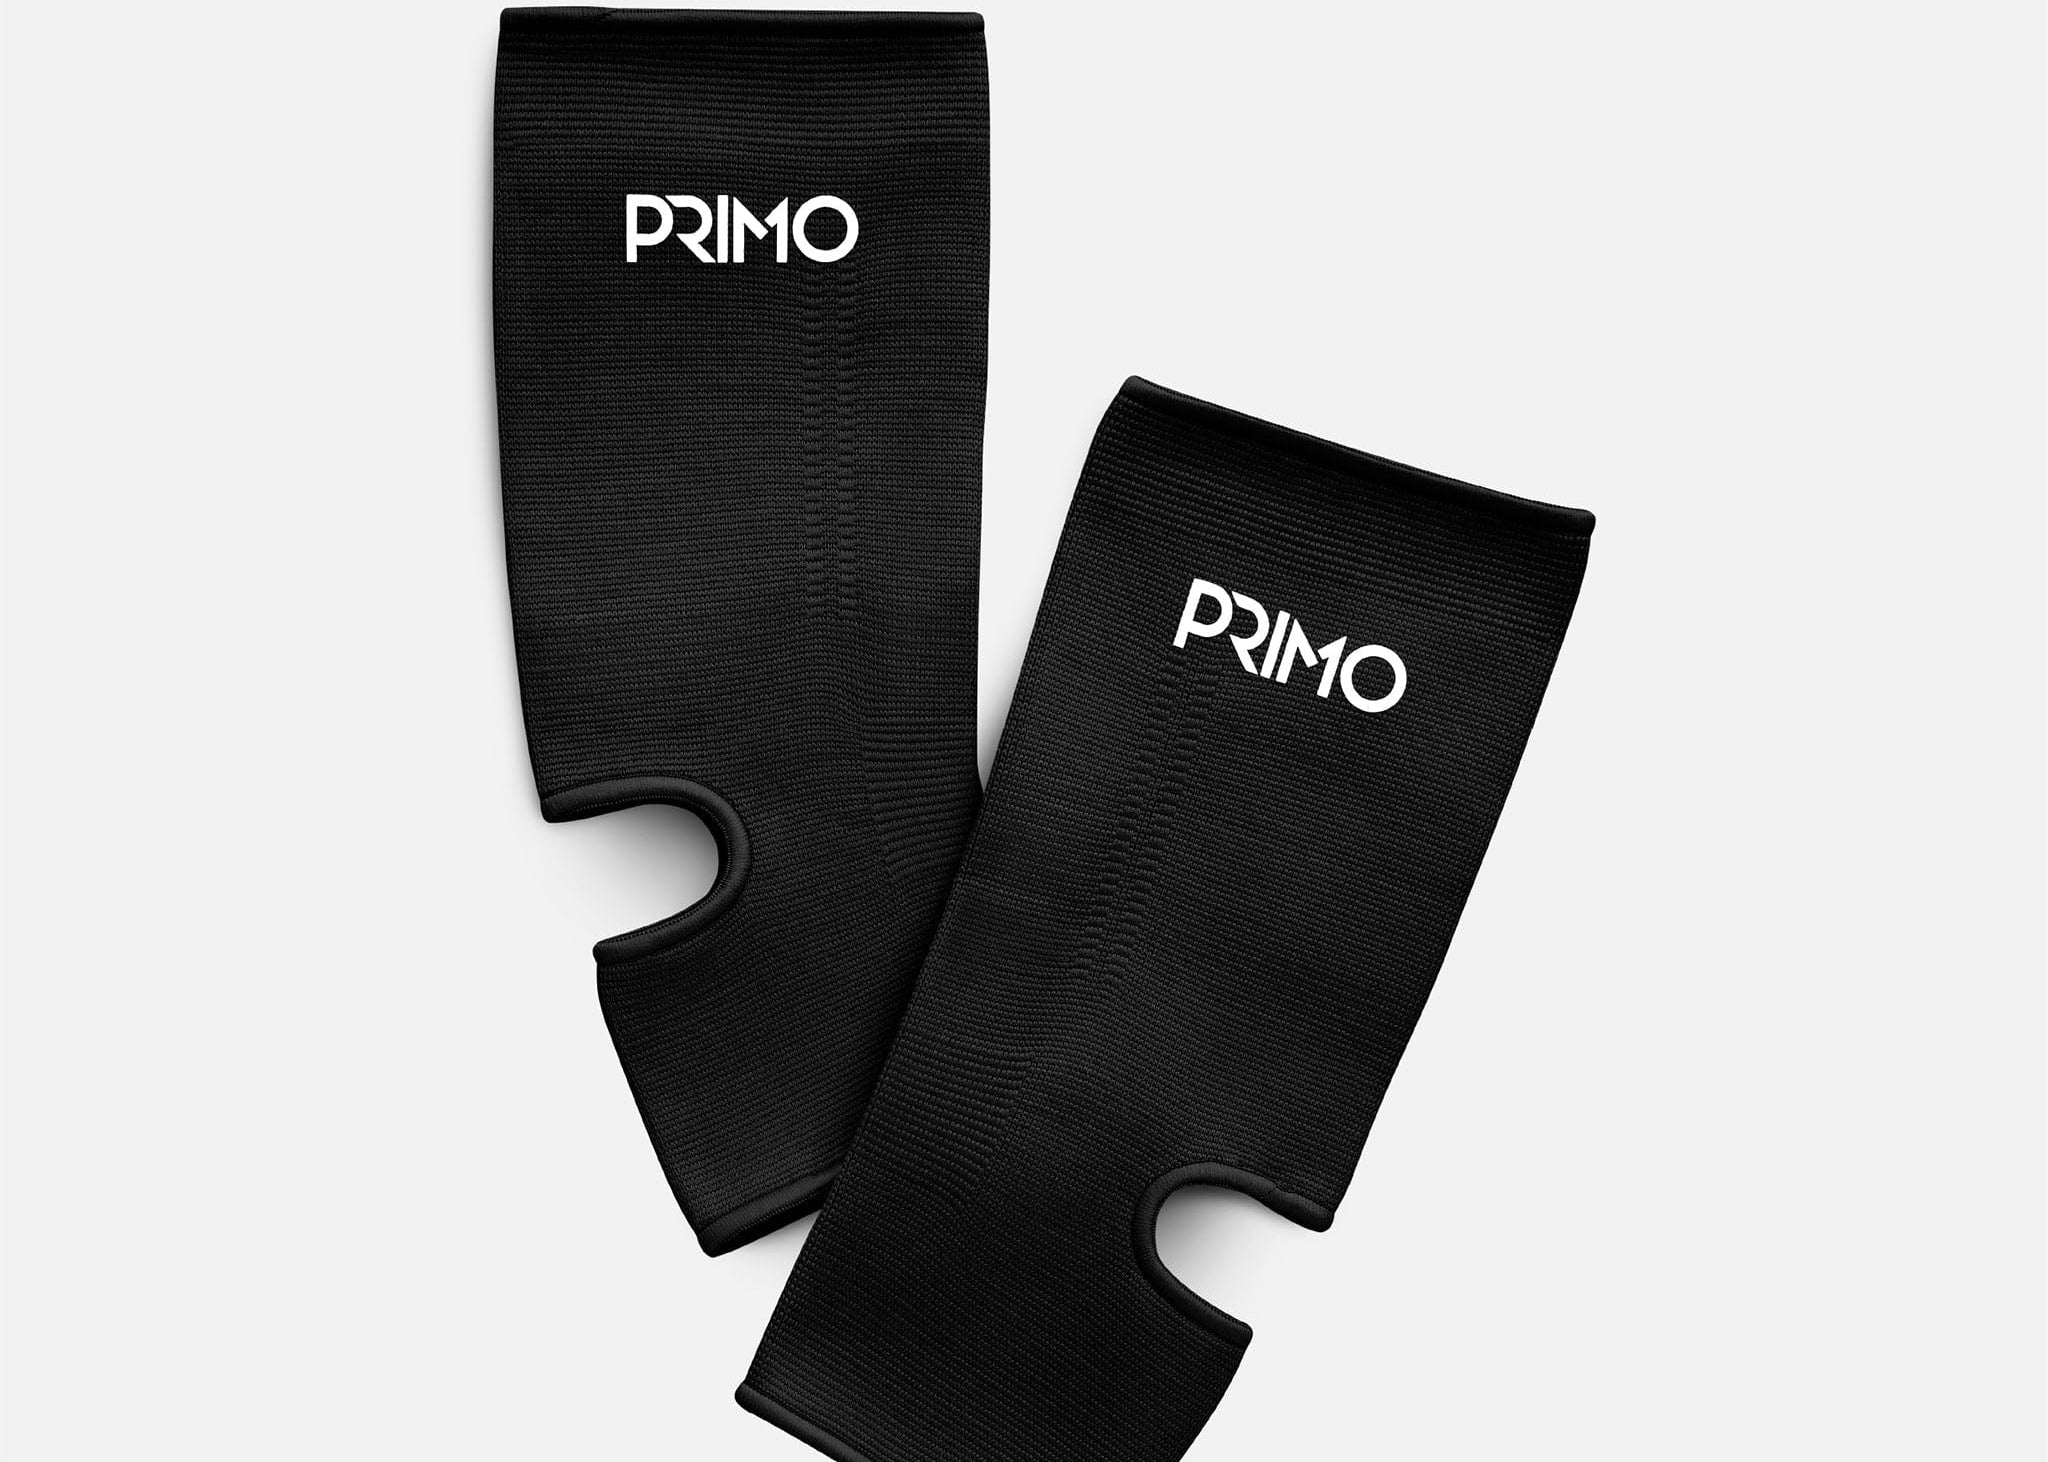 Primo Fight Wear Official Primo Monochrome Ankleguards - Black